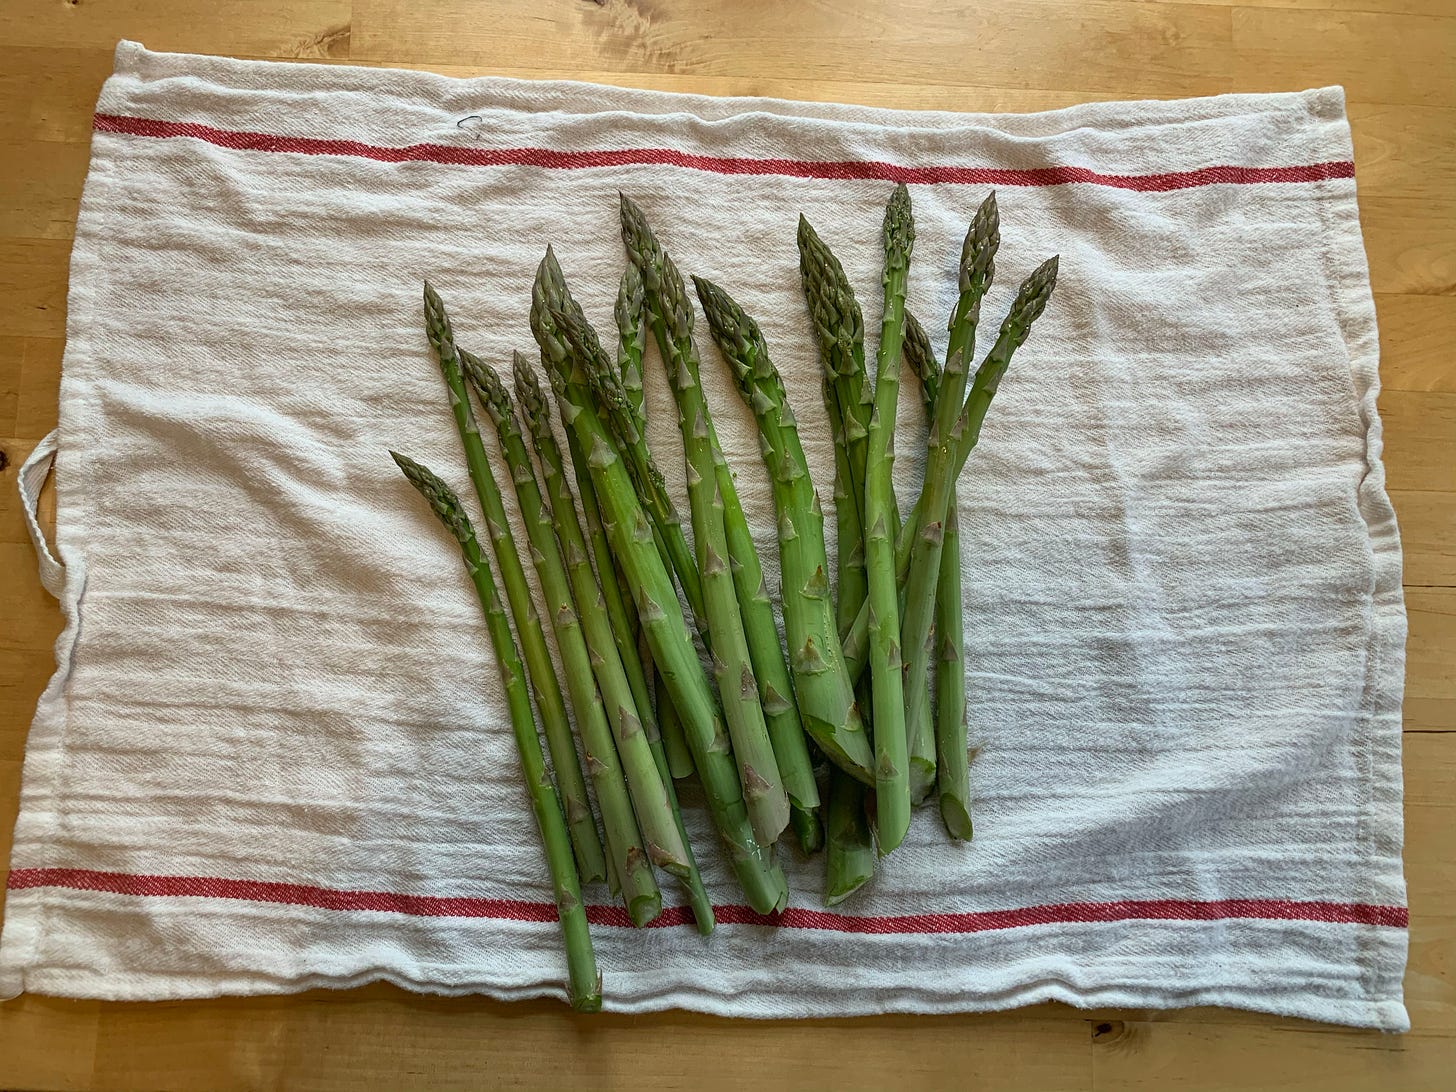 Several stalks of cut asparagus on a white tea towel